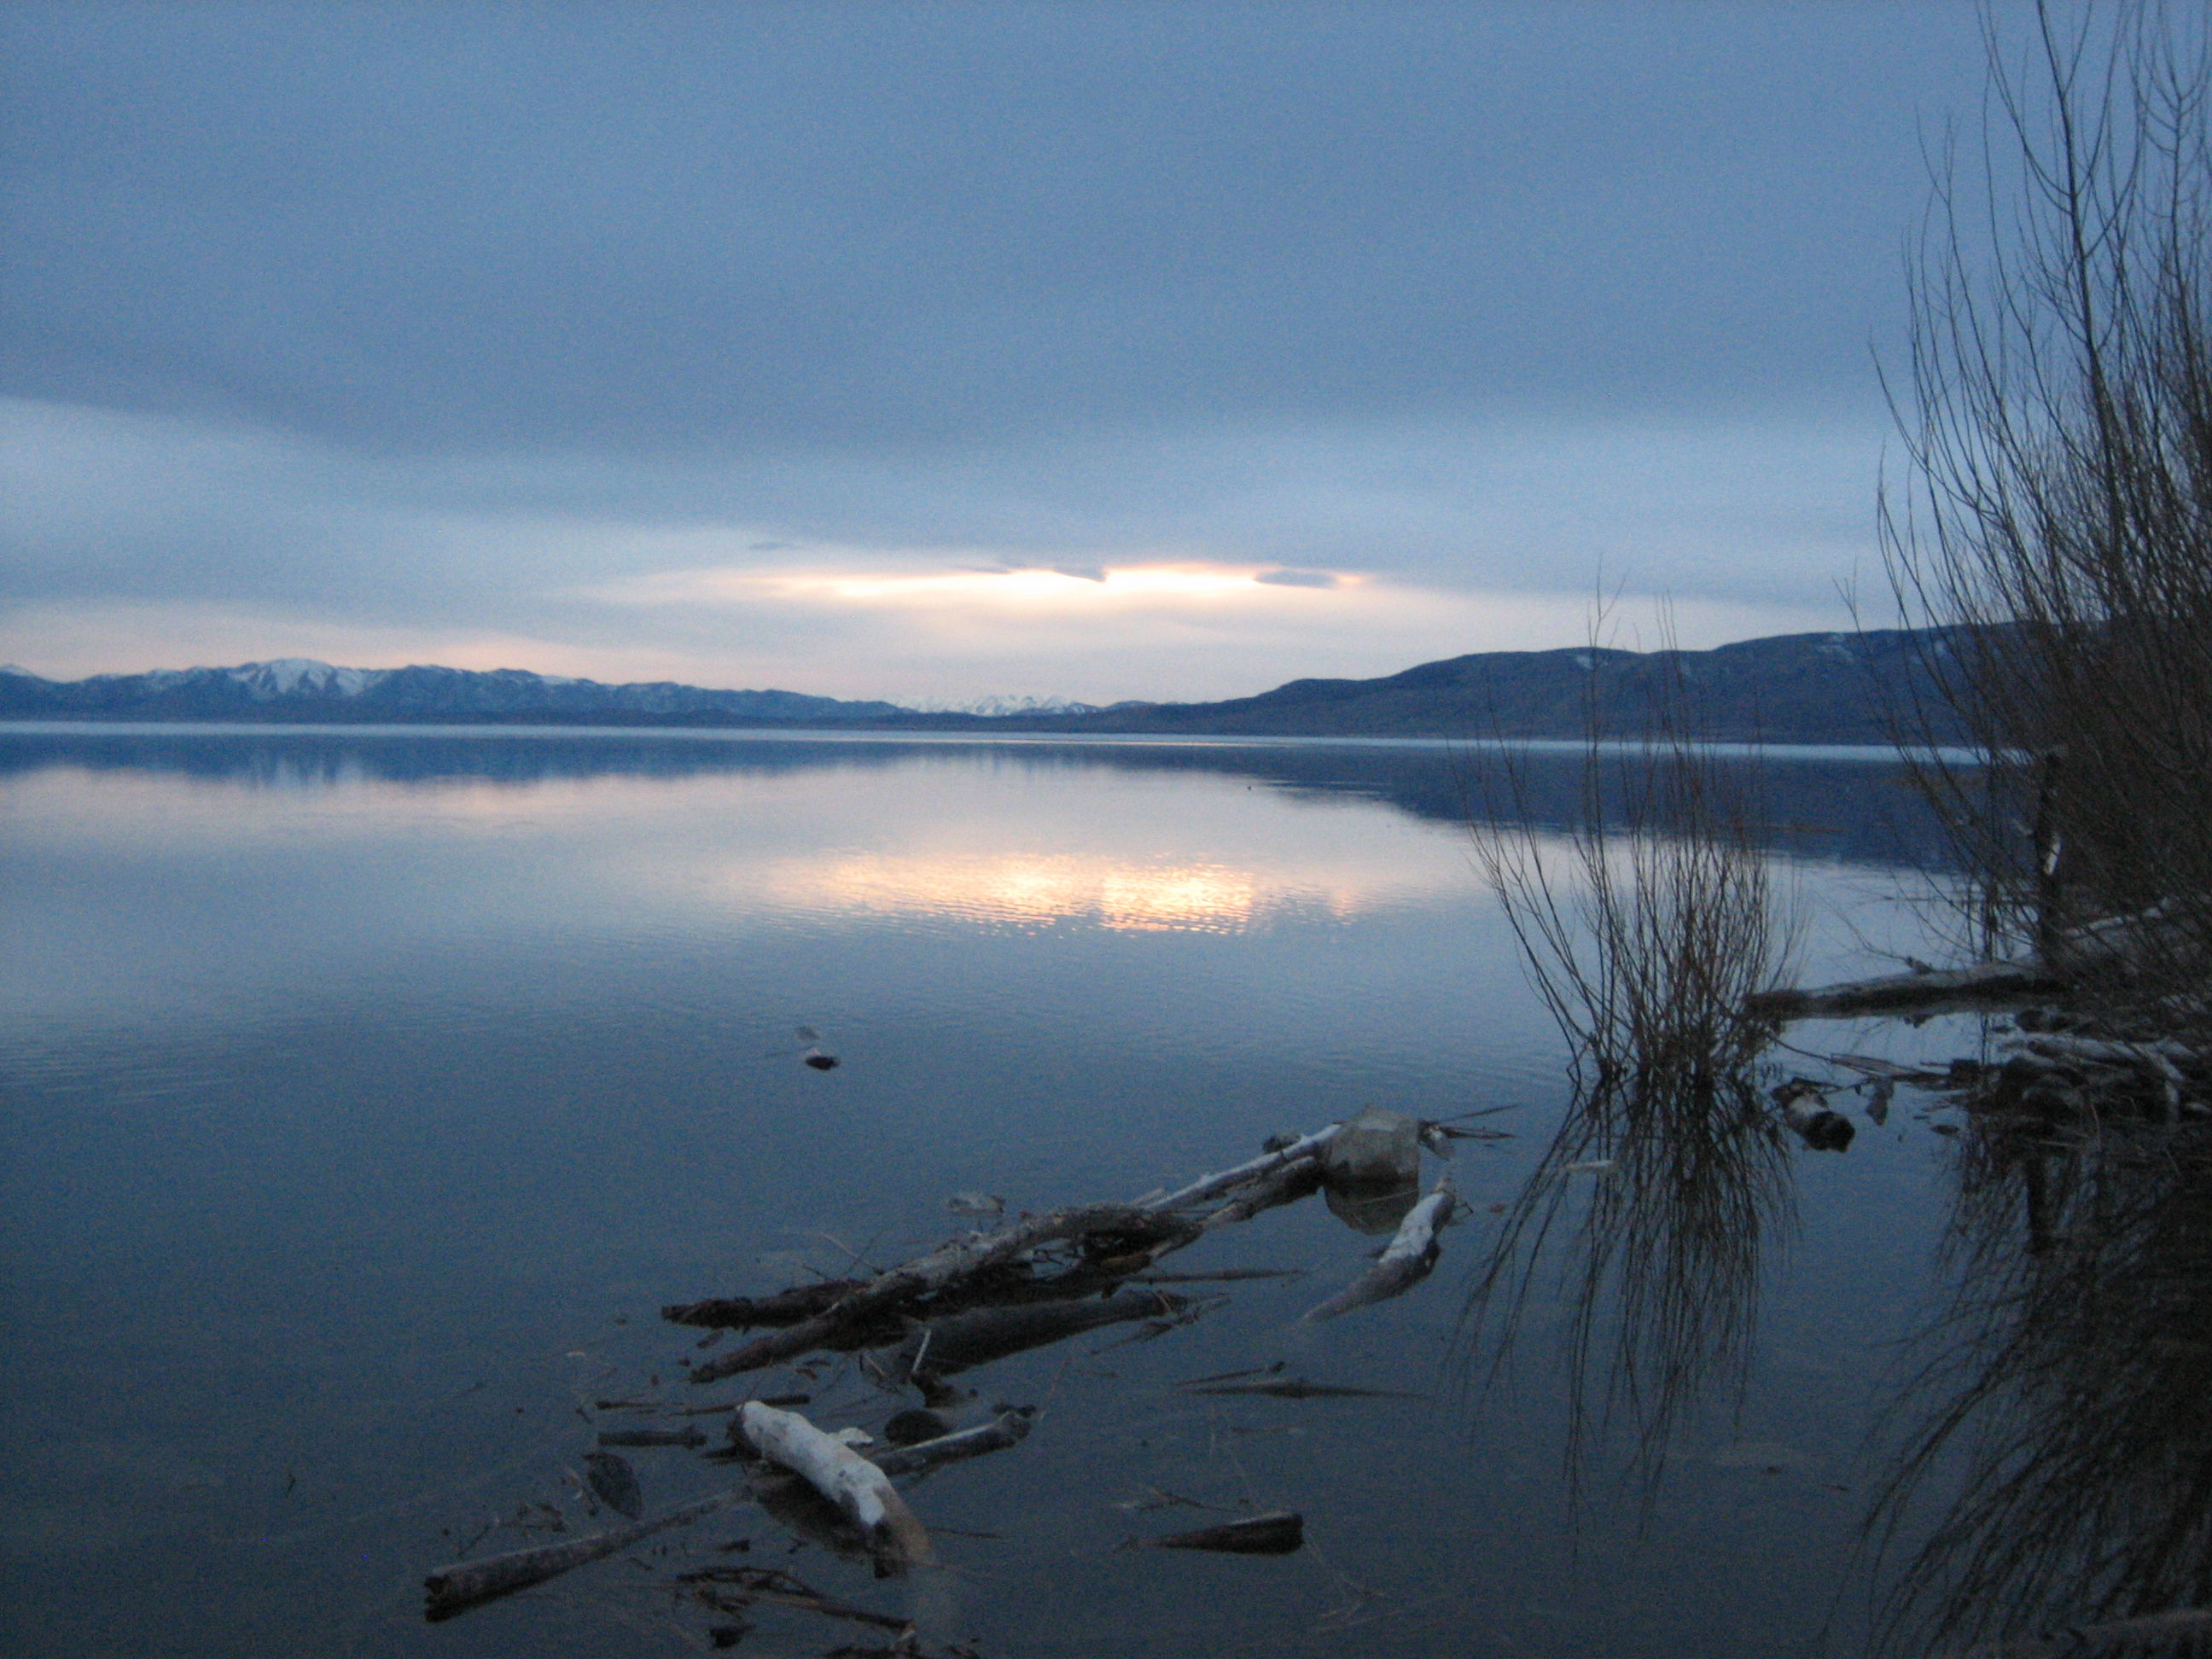 Sun setting on a lake near Salt Lake City